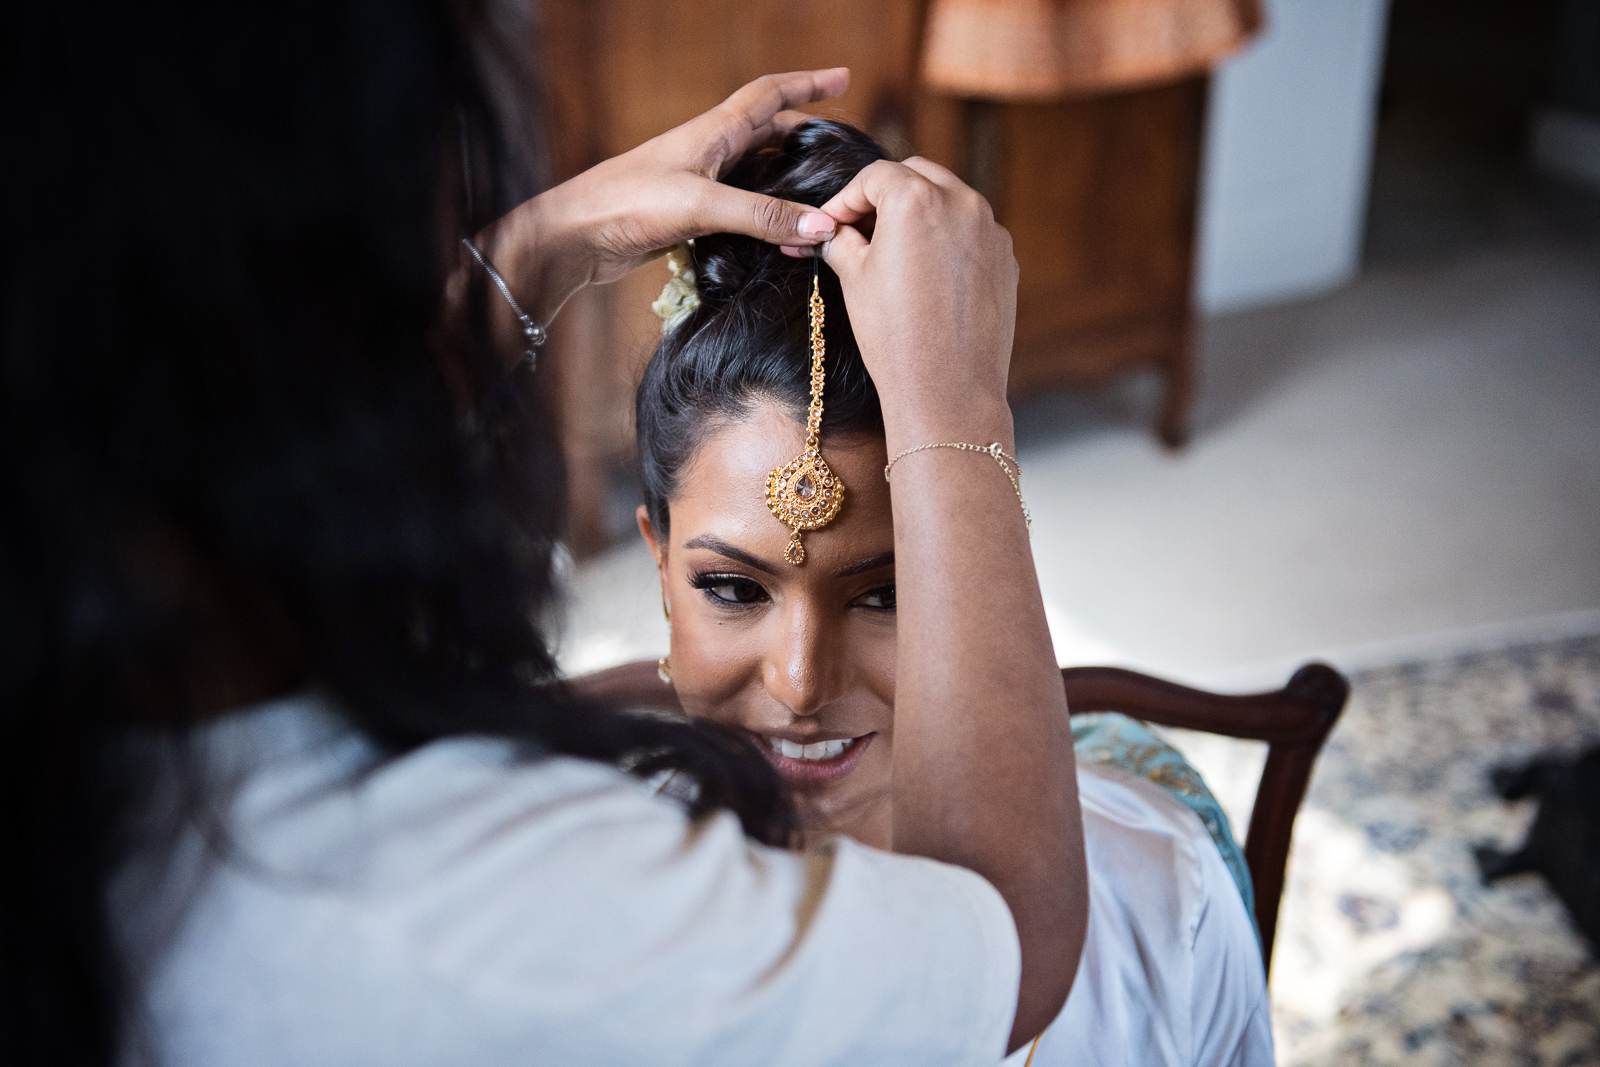 Deepika Padukone | Adhuna Bhabani on bridal hairstyles - Telegraph India